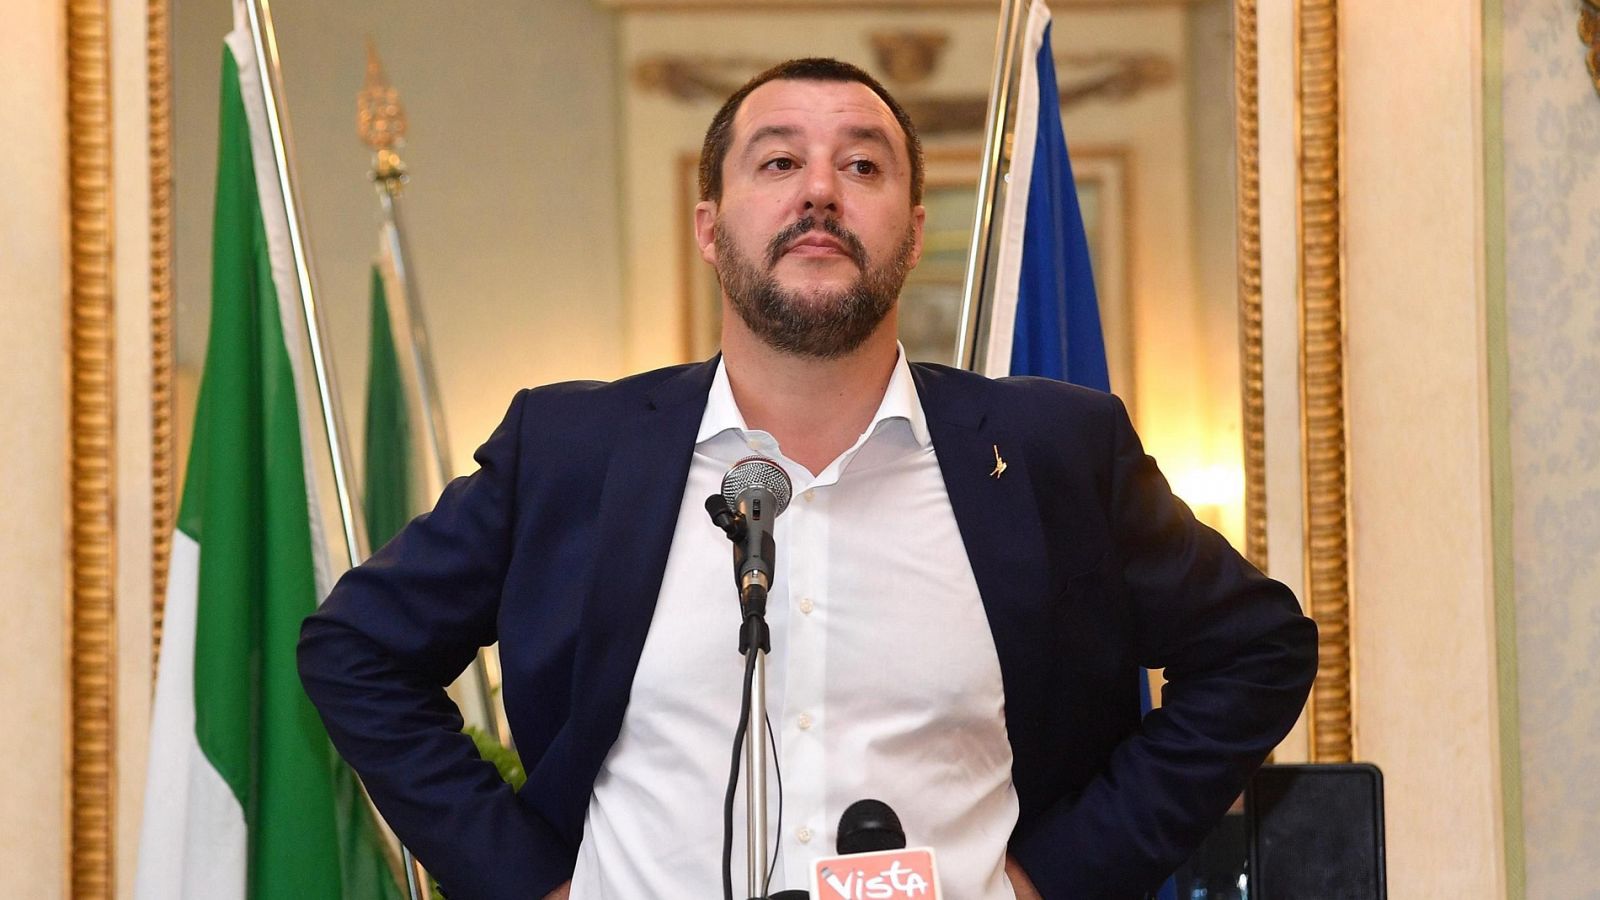 El ministro italiano del Interior, Matteo Salvini, fotografiado en Génova, Italia